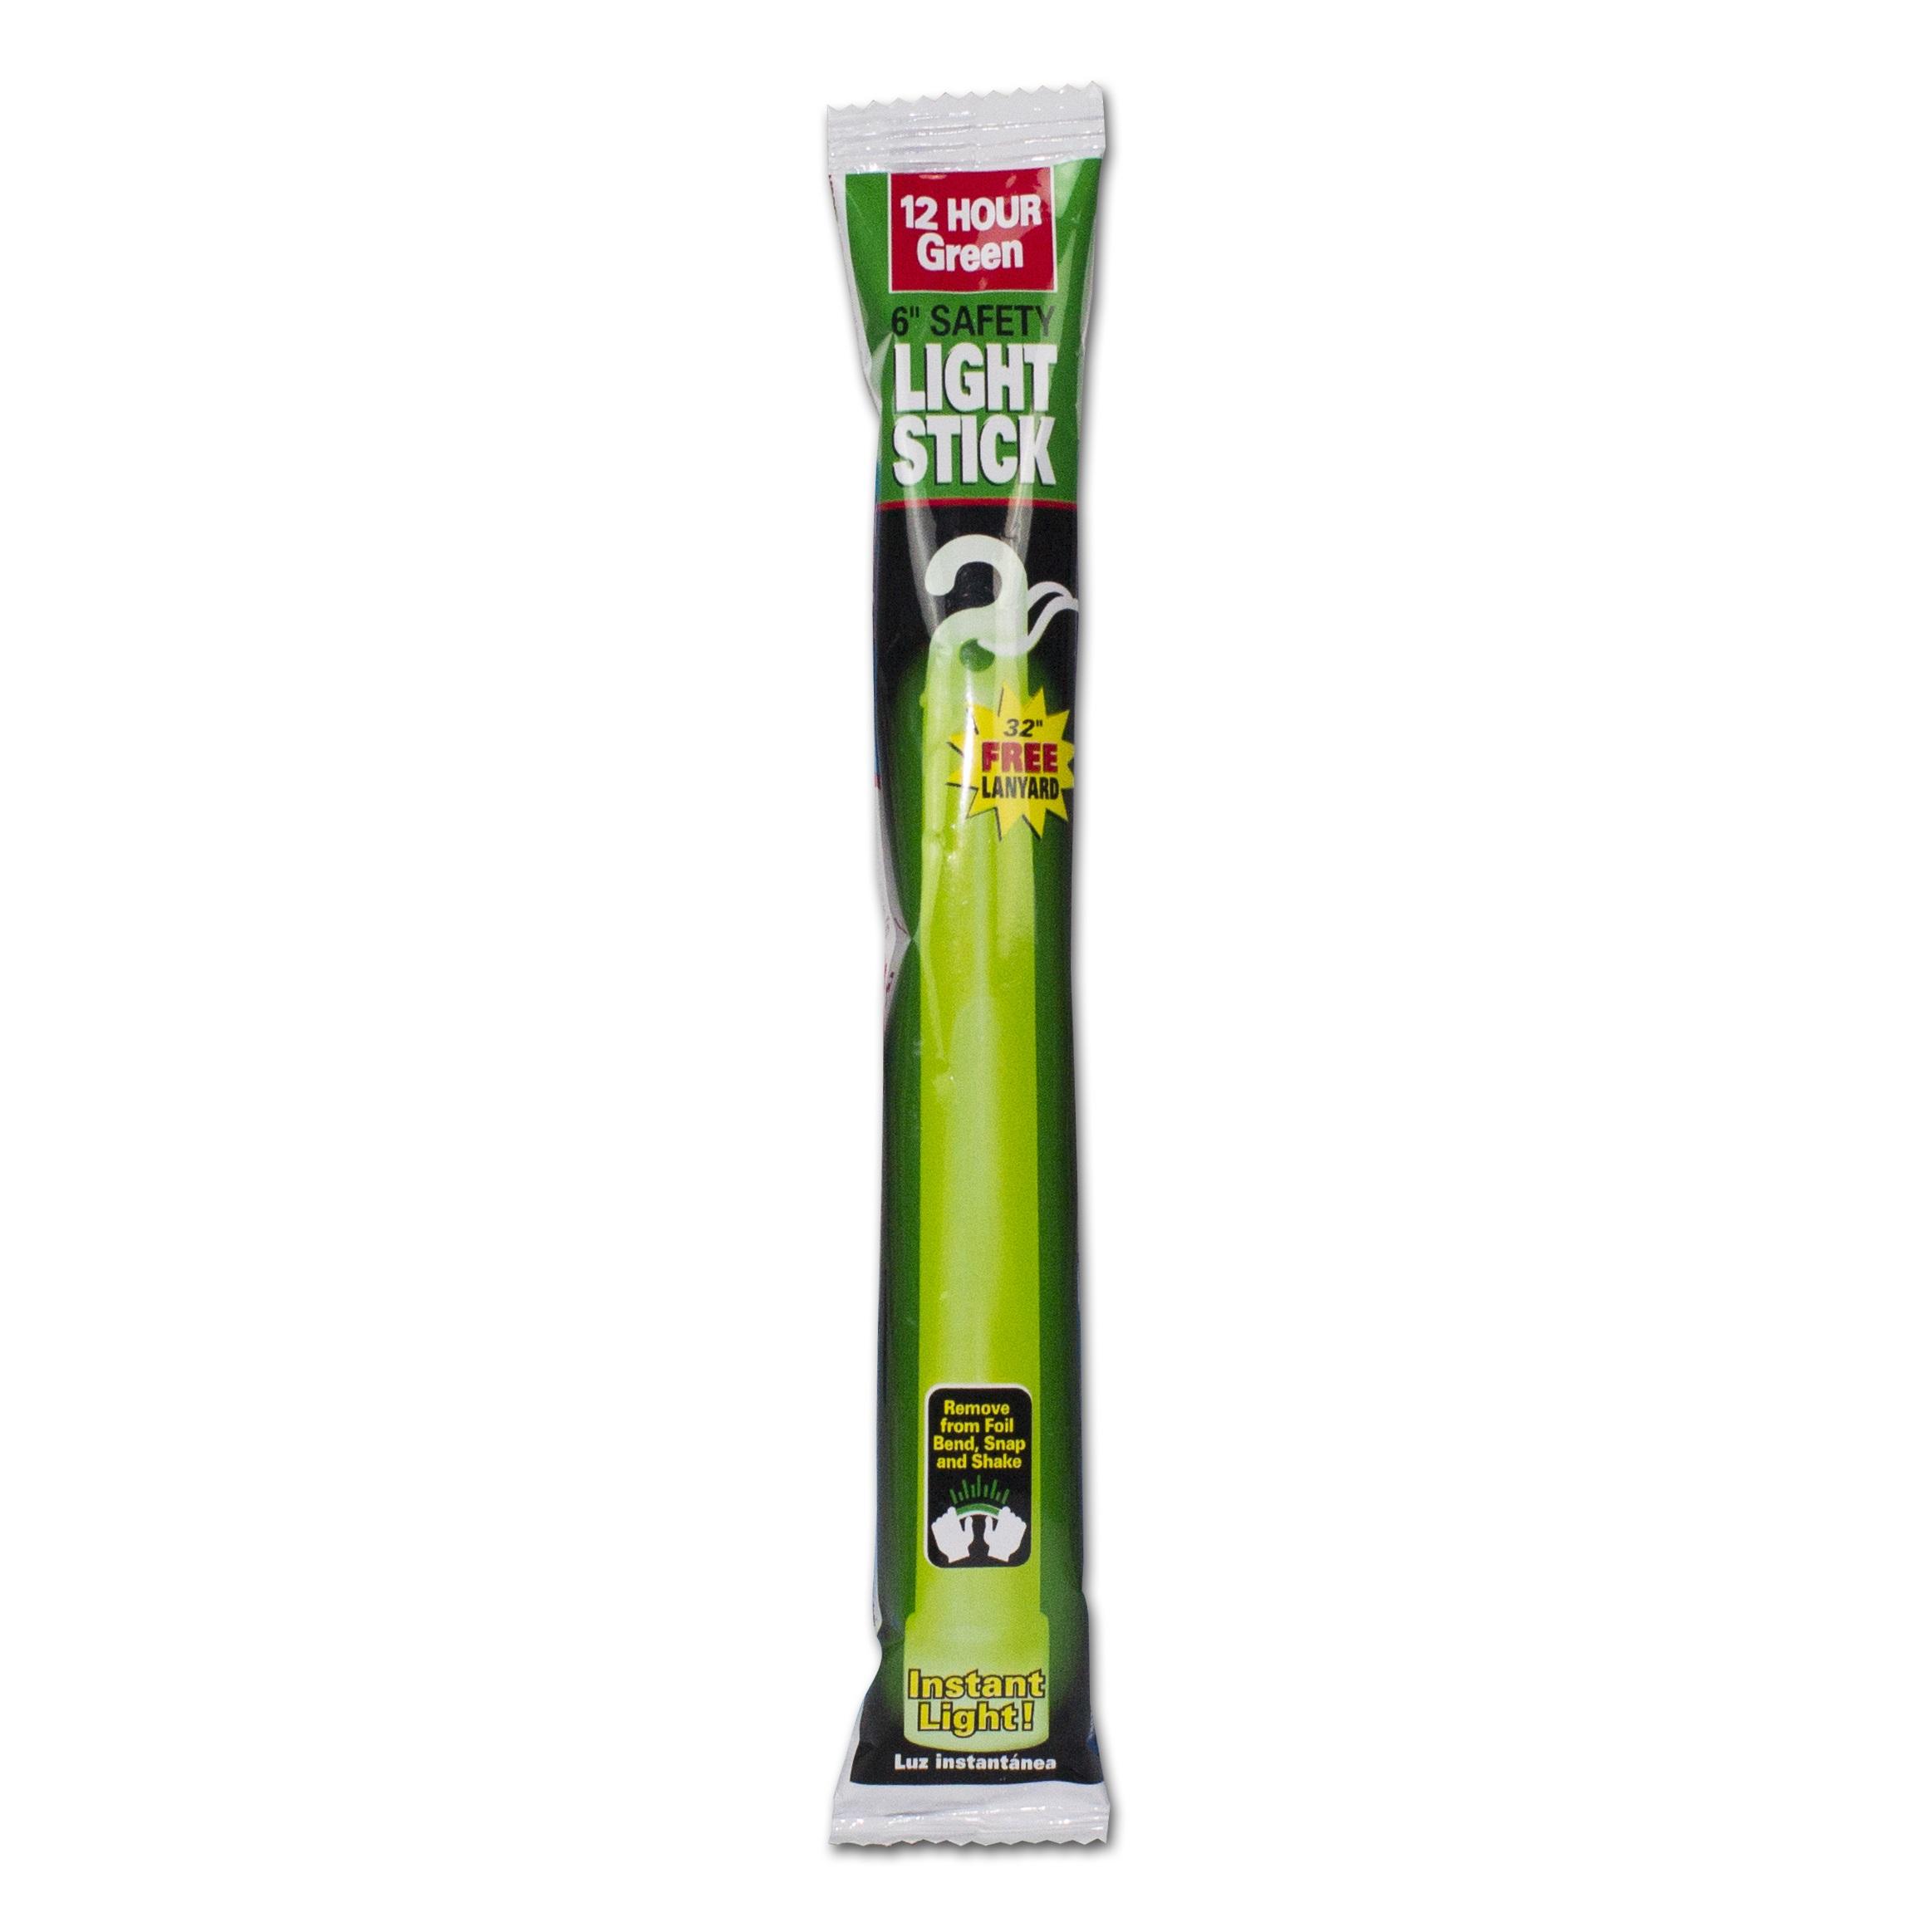 6inch green Snaplight lightstick of 12 hours illumination